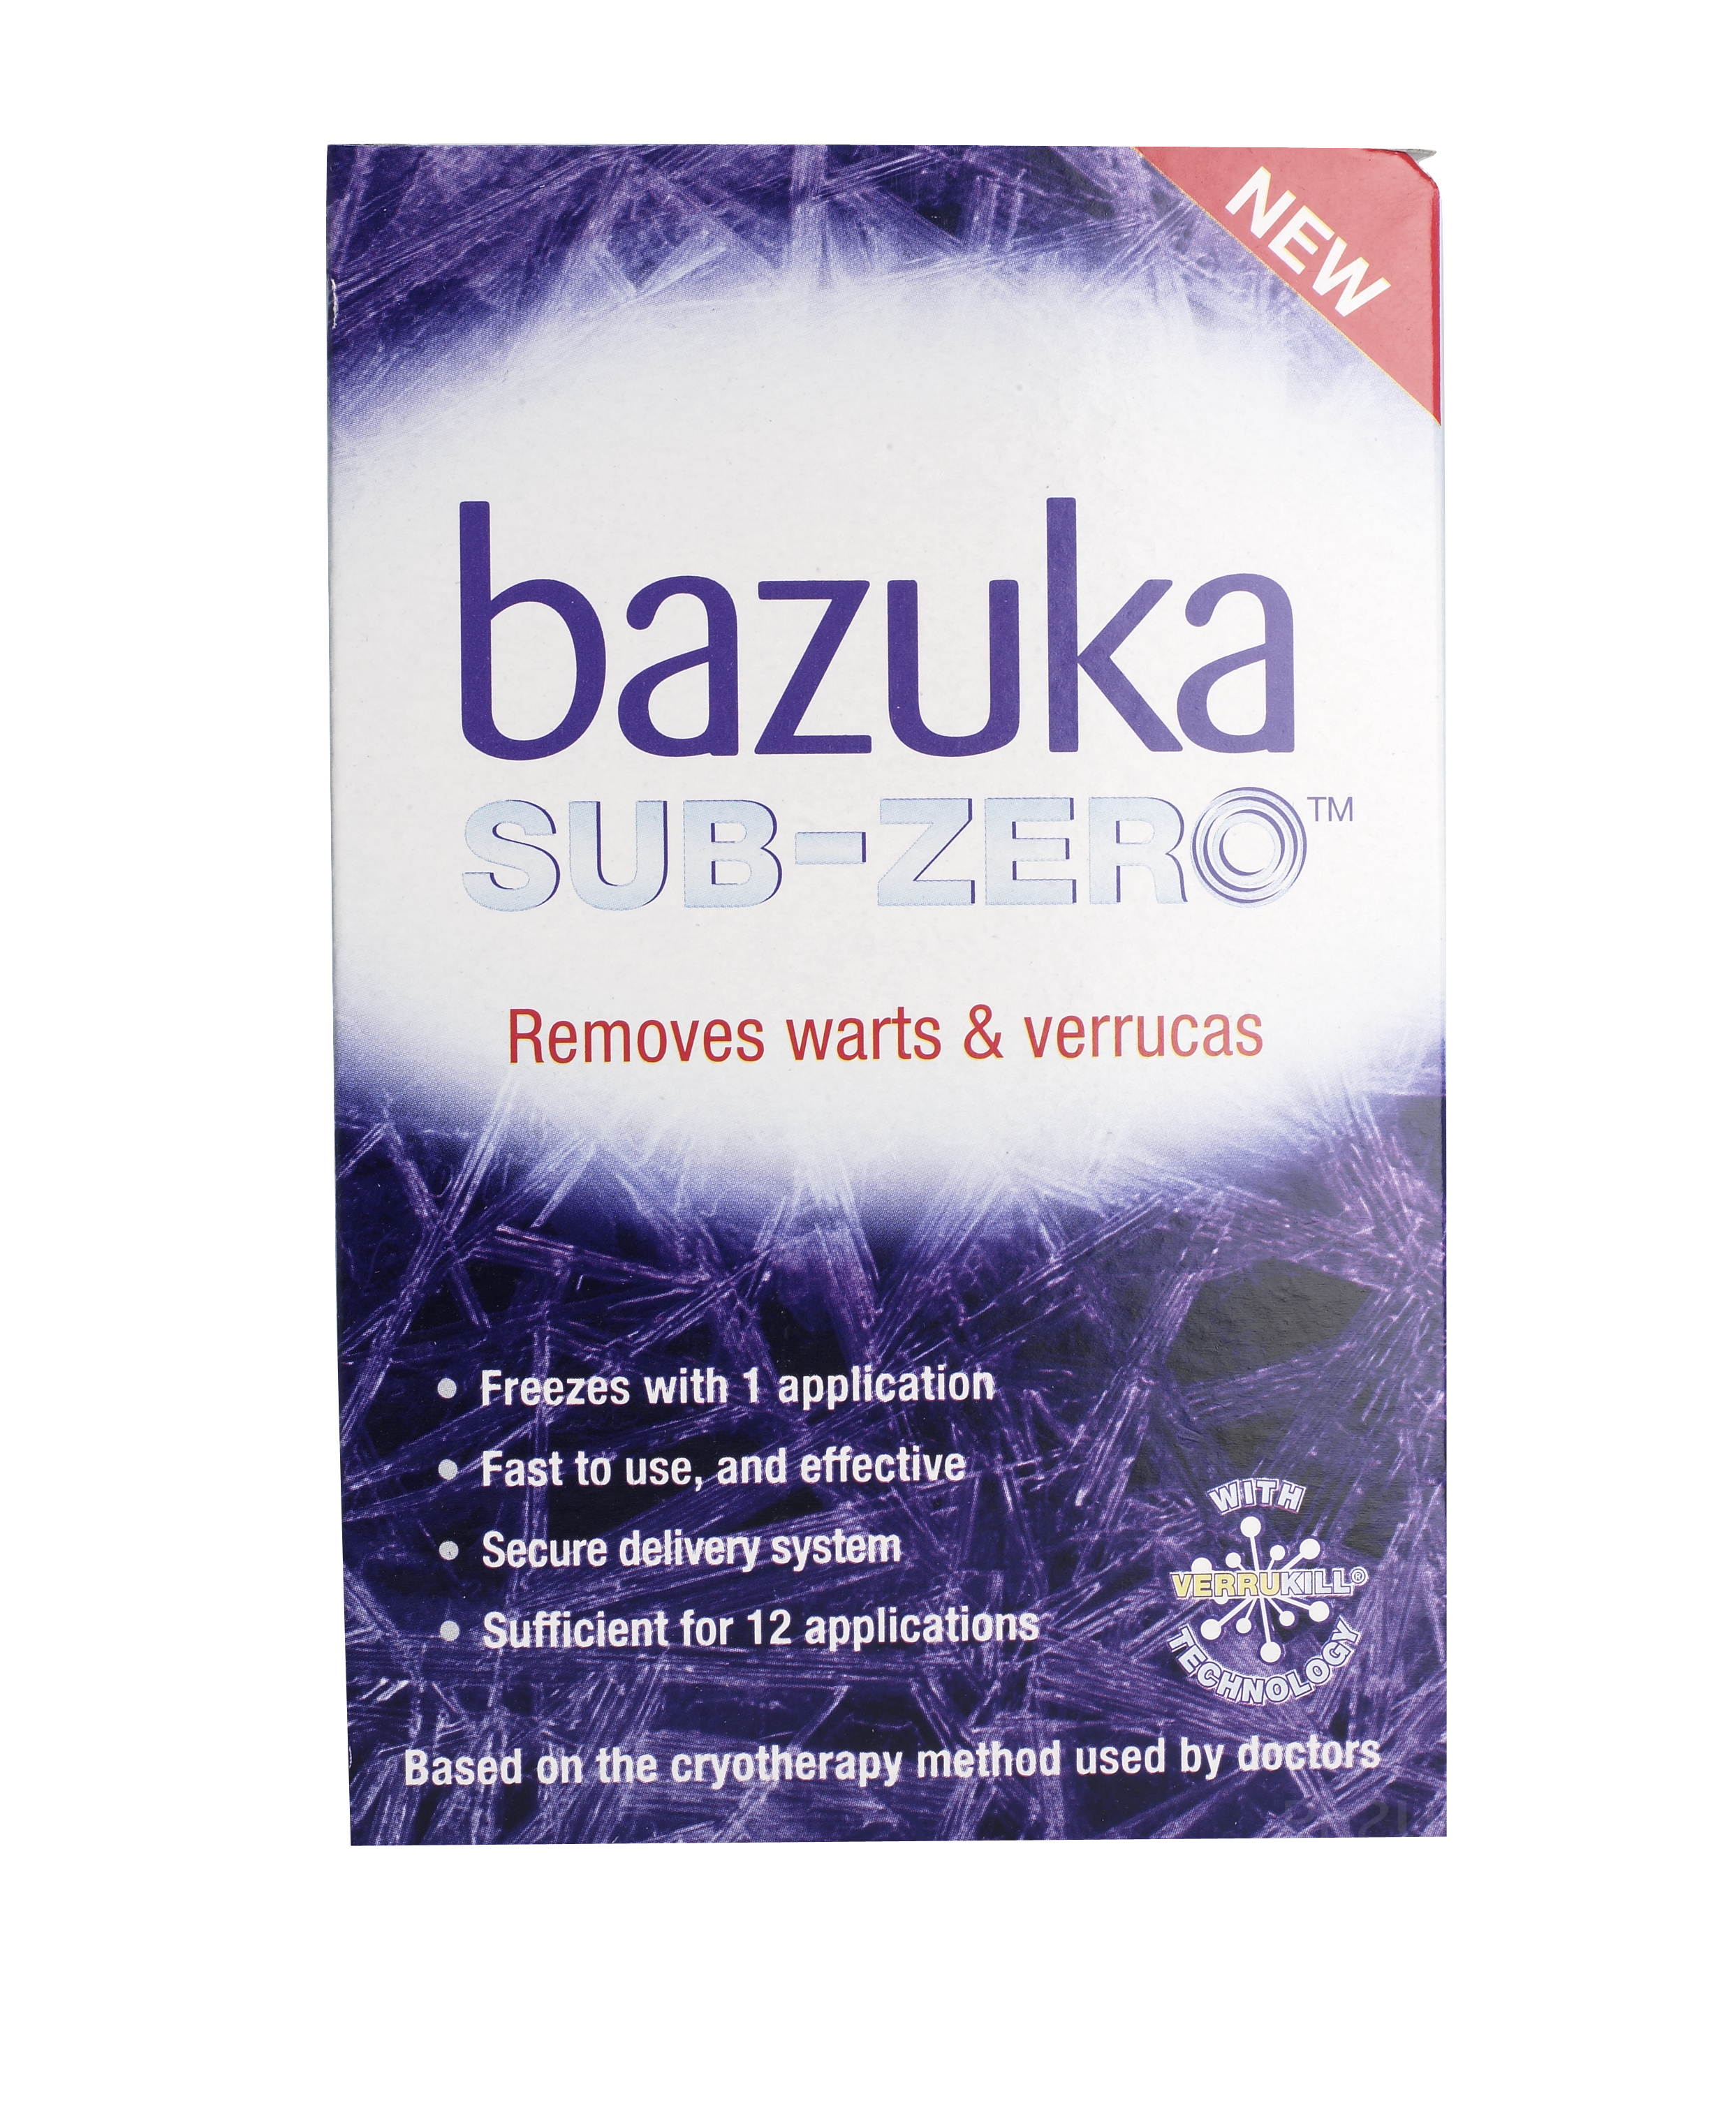 Bazuka Sub Zero